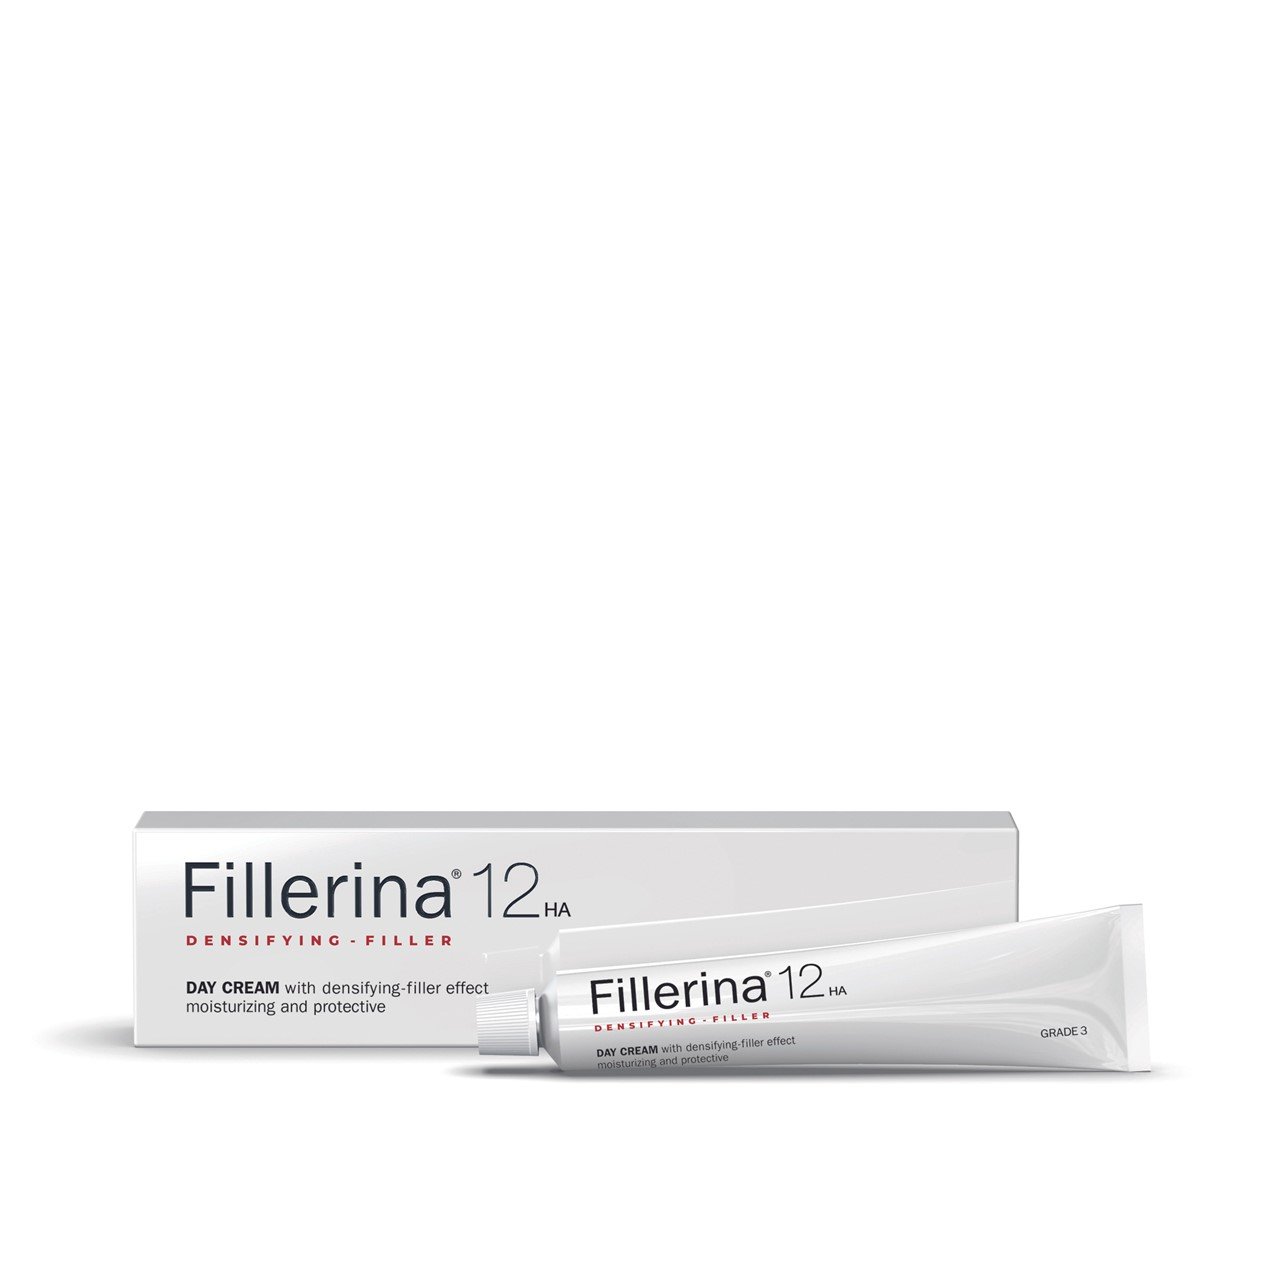 Fillerina 12HA Densifying-Filler Day Cream Grade 3 50ml (1.69fl oz)